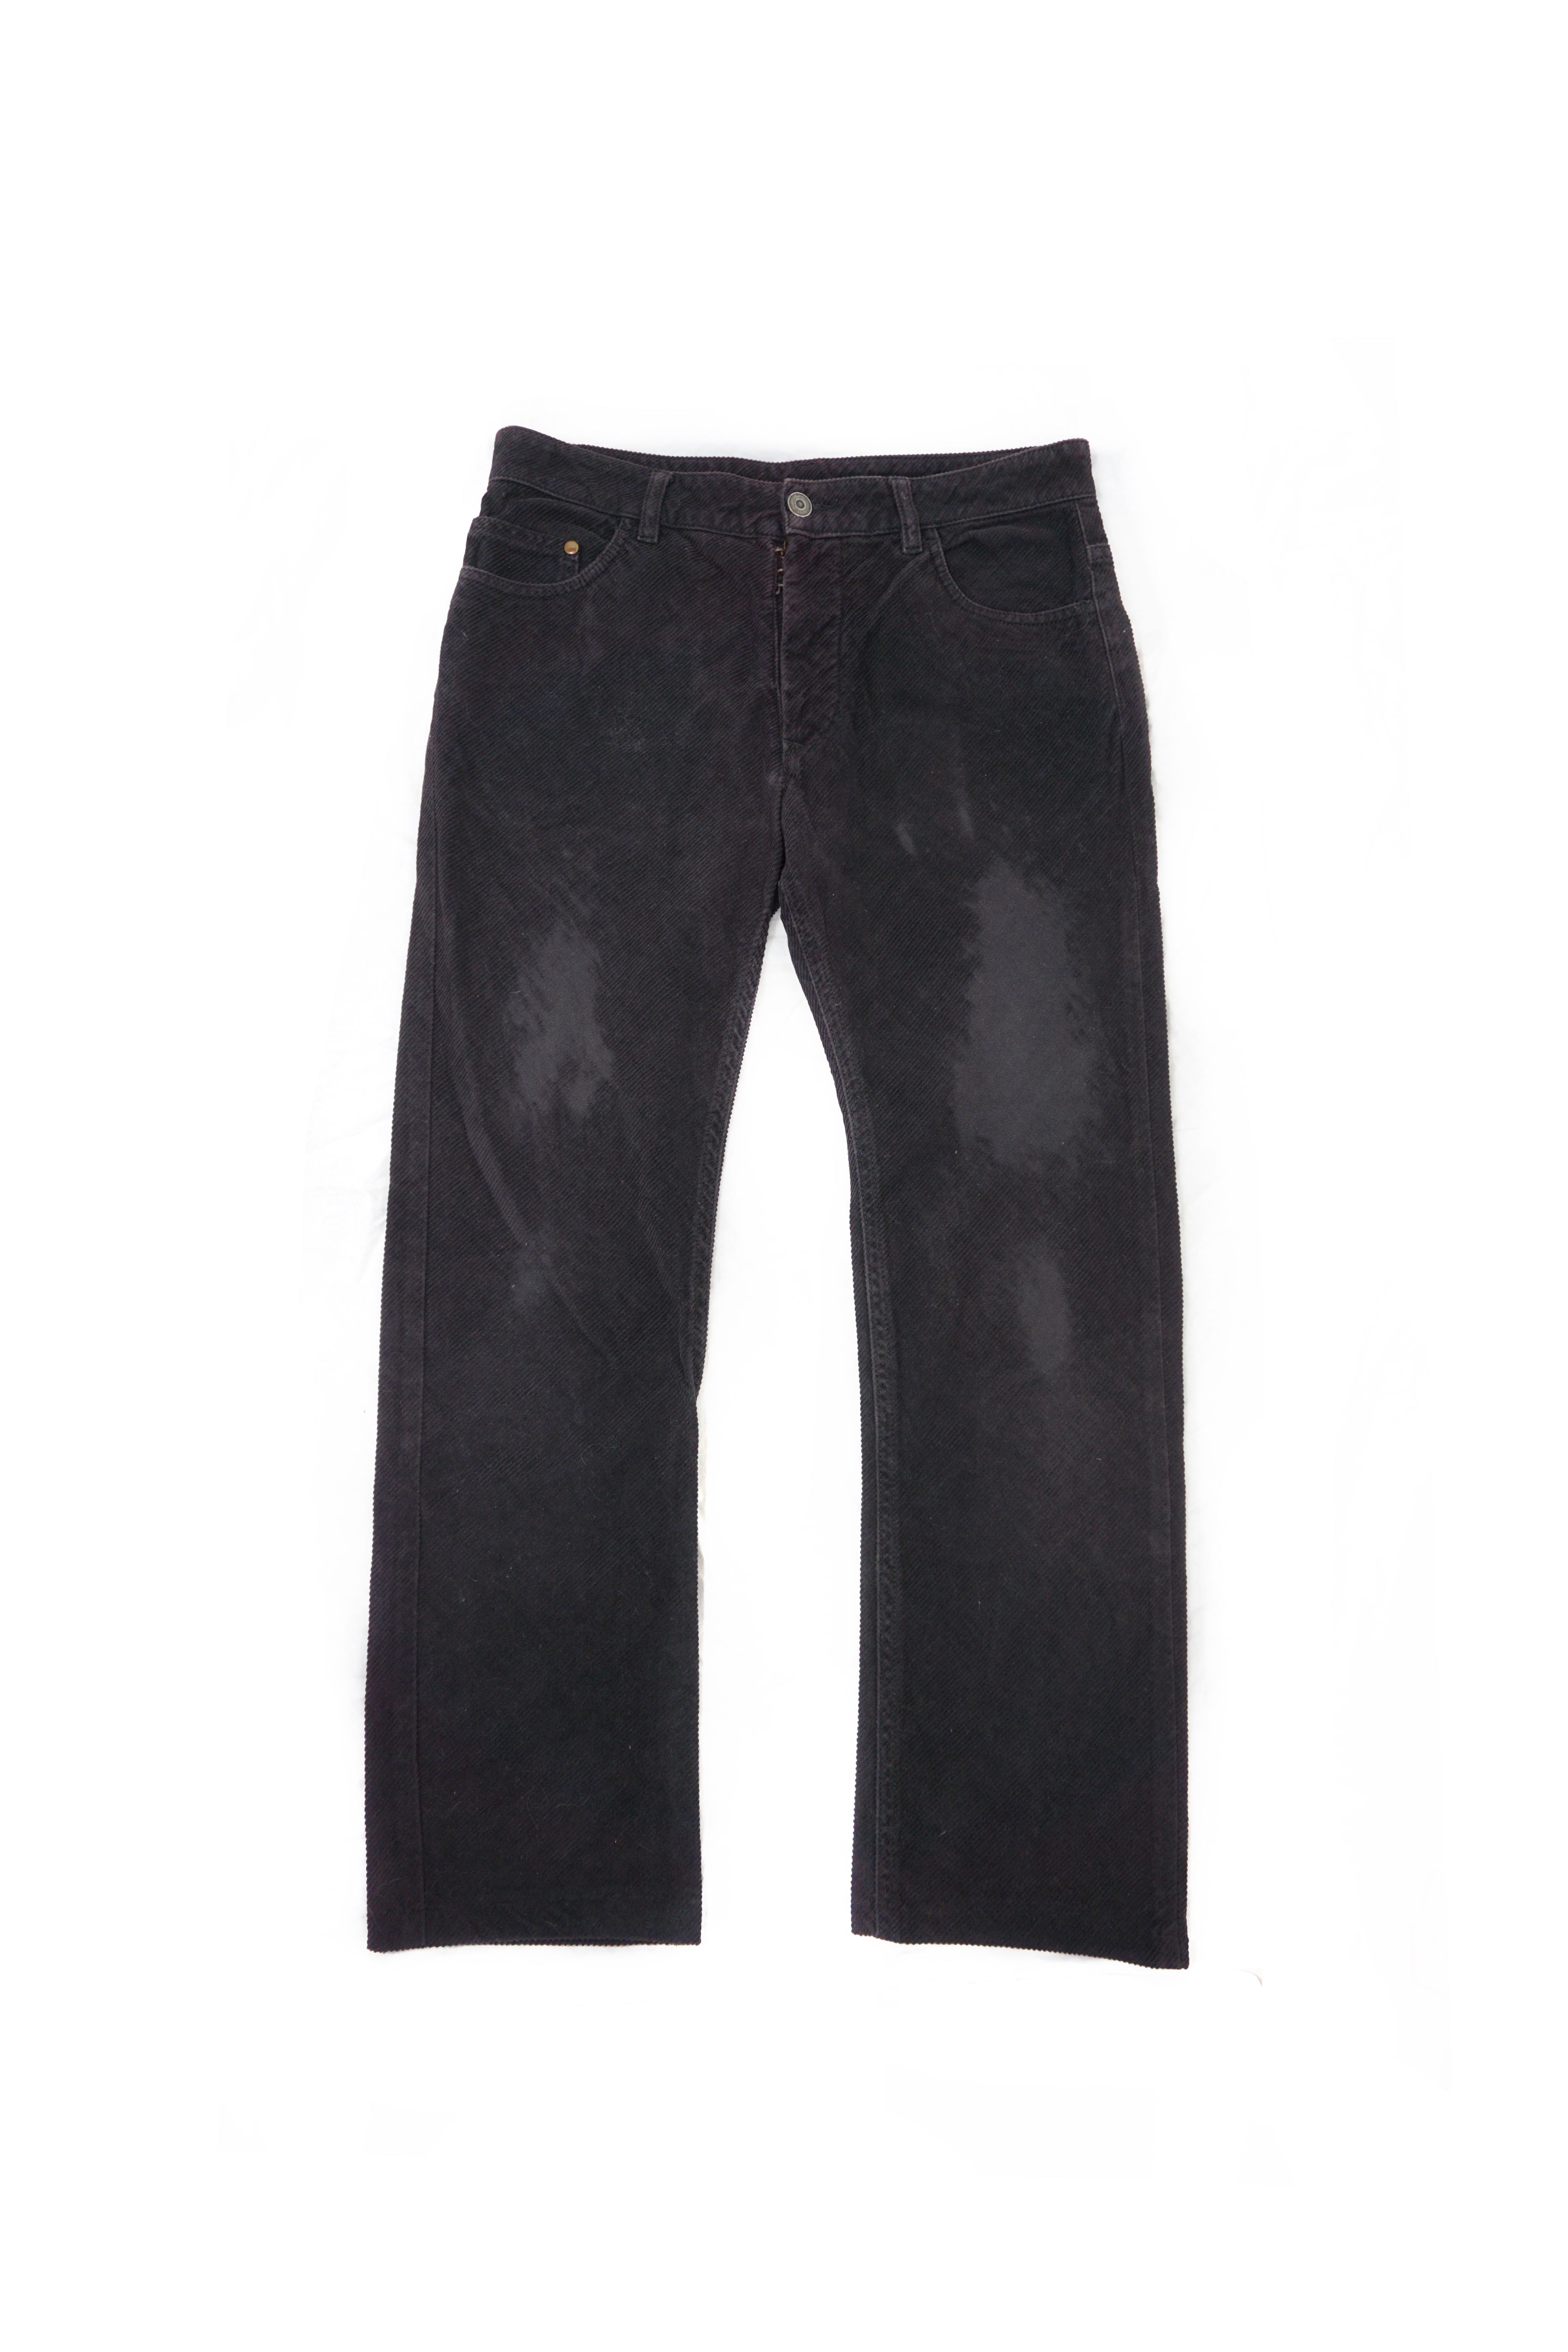 Maison Margiela Distressed Corduroy Pants Size 29" - 1 Preview